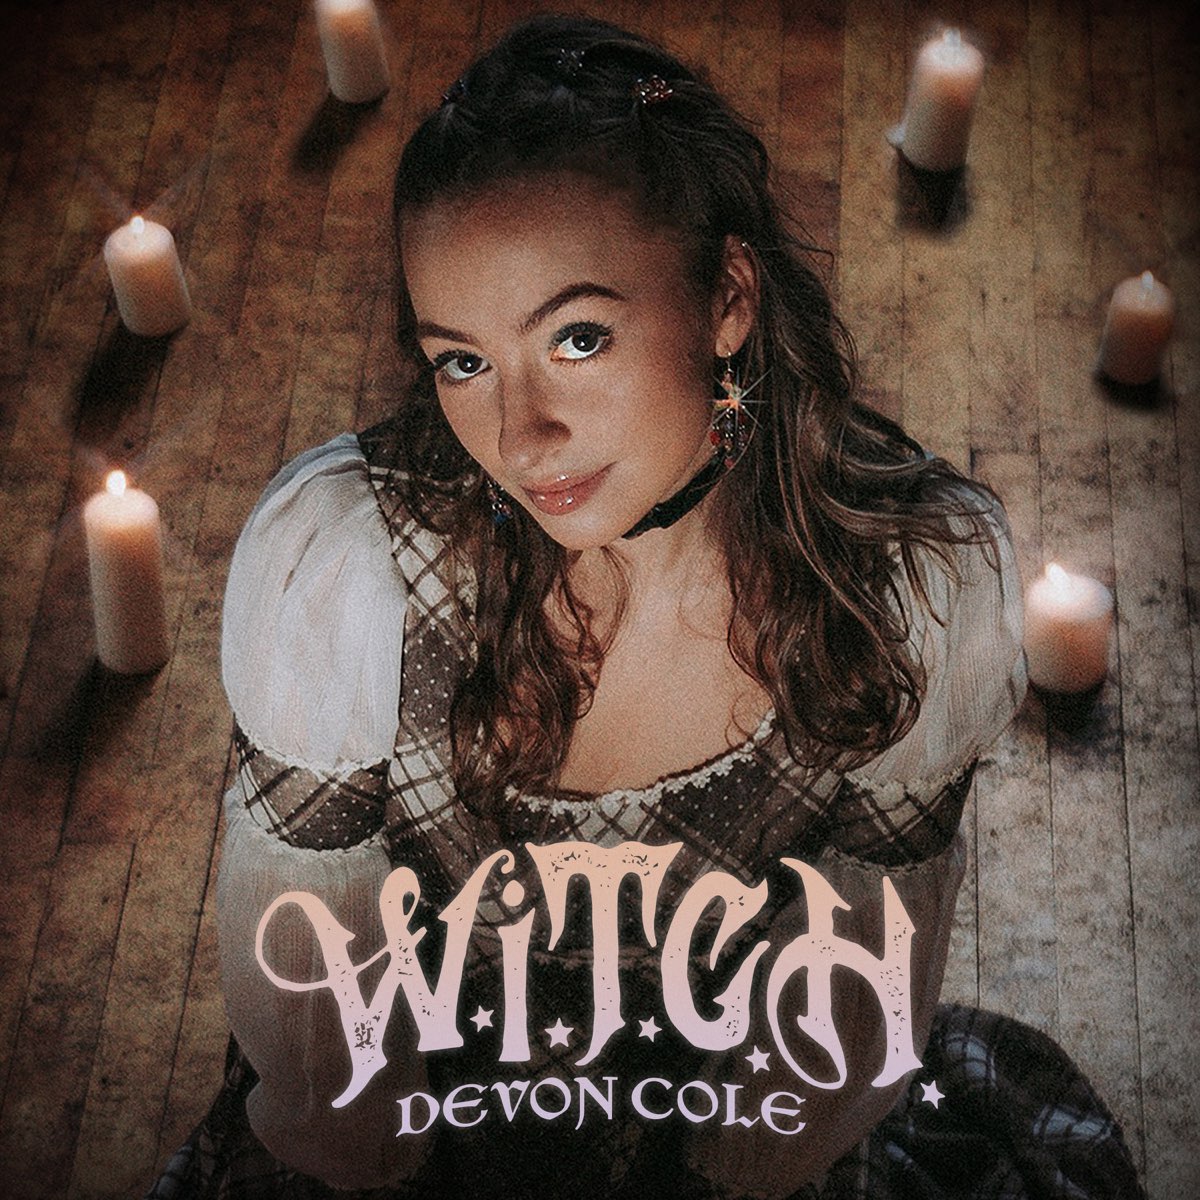 Devon cole witch lyrics